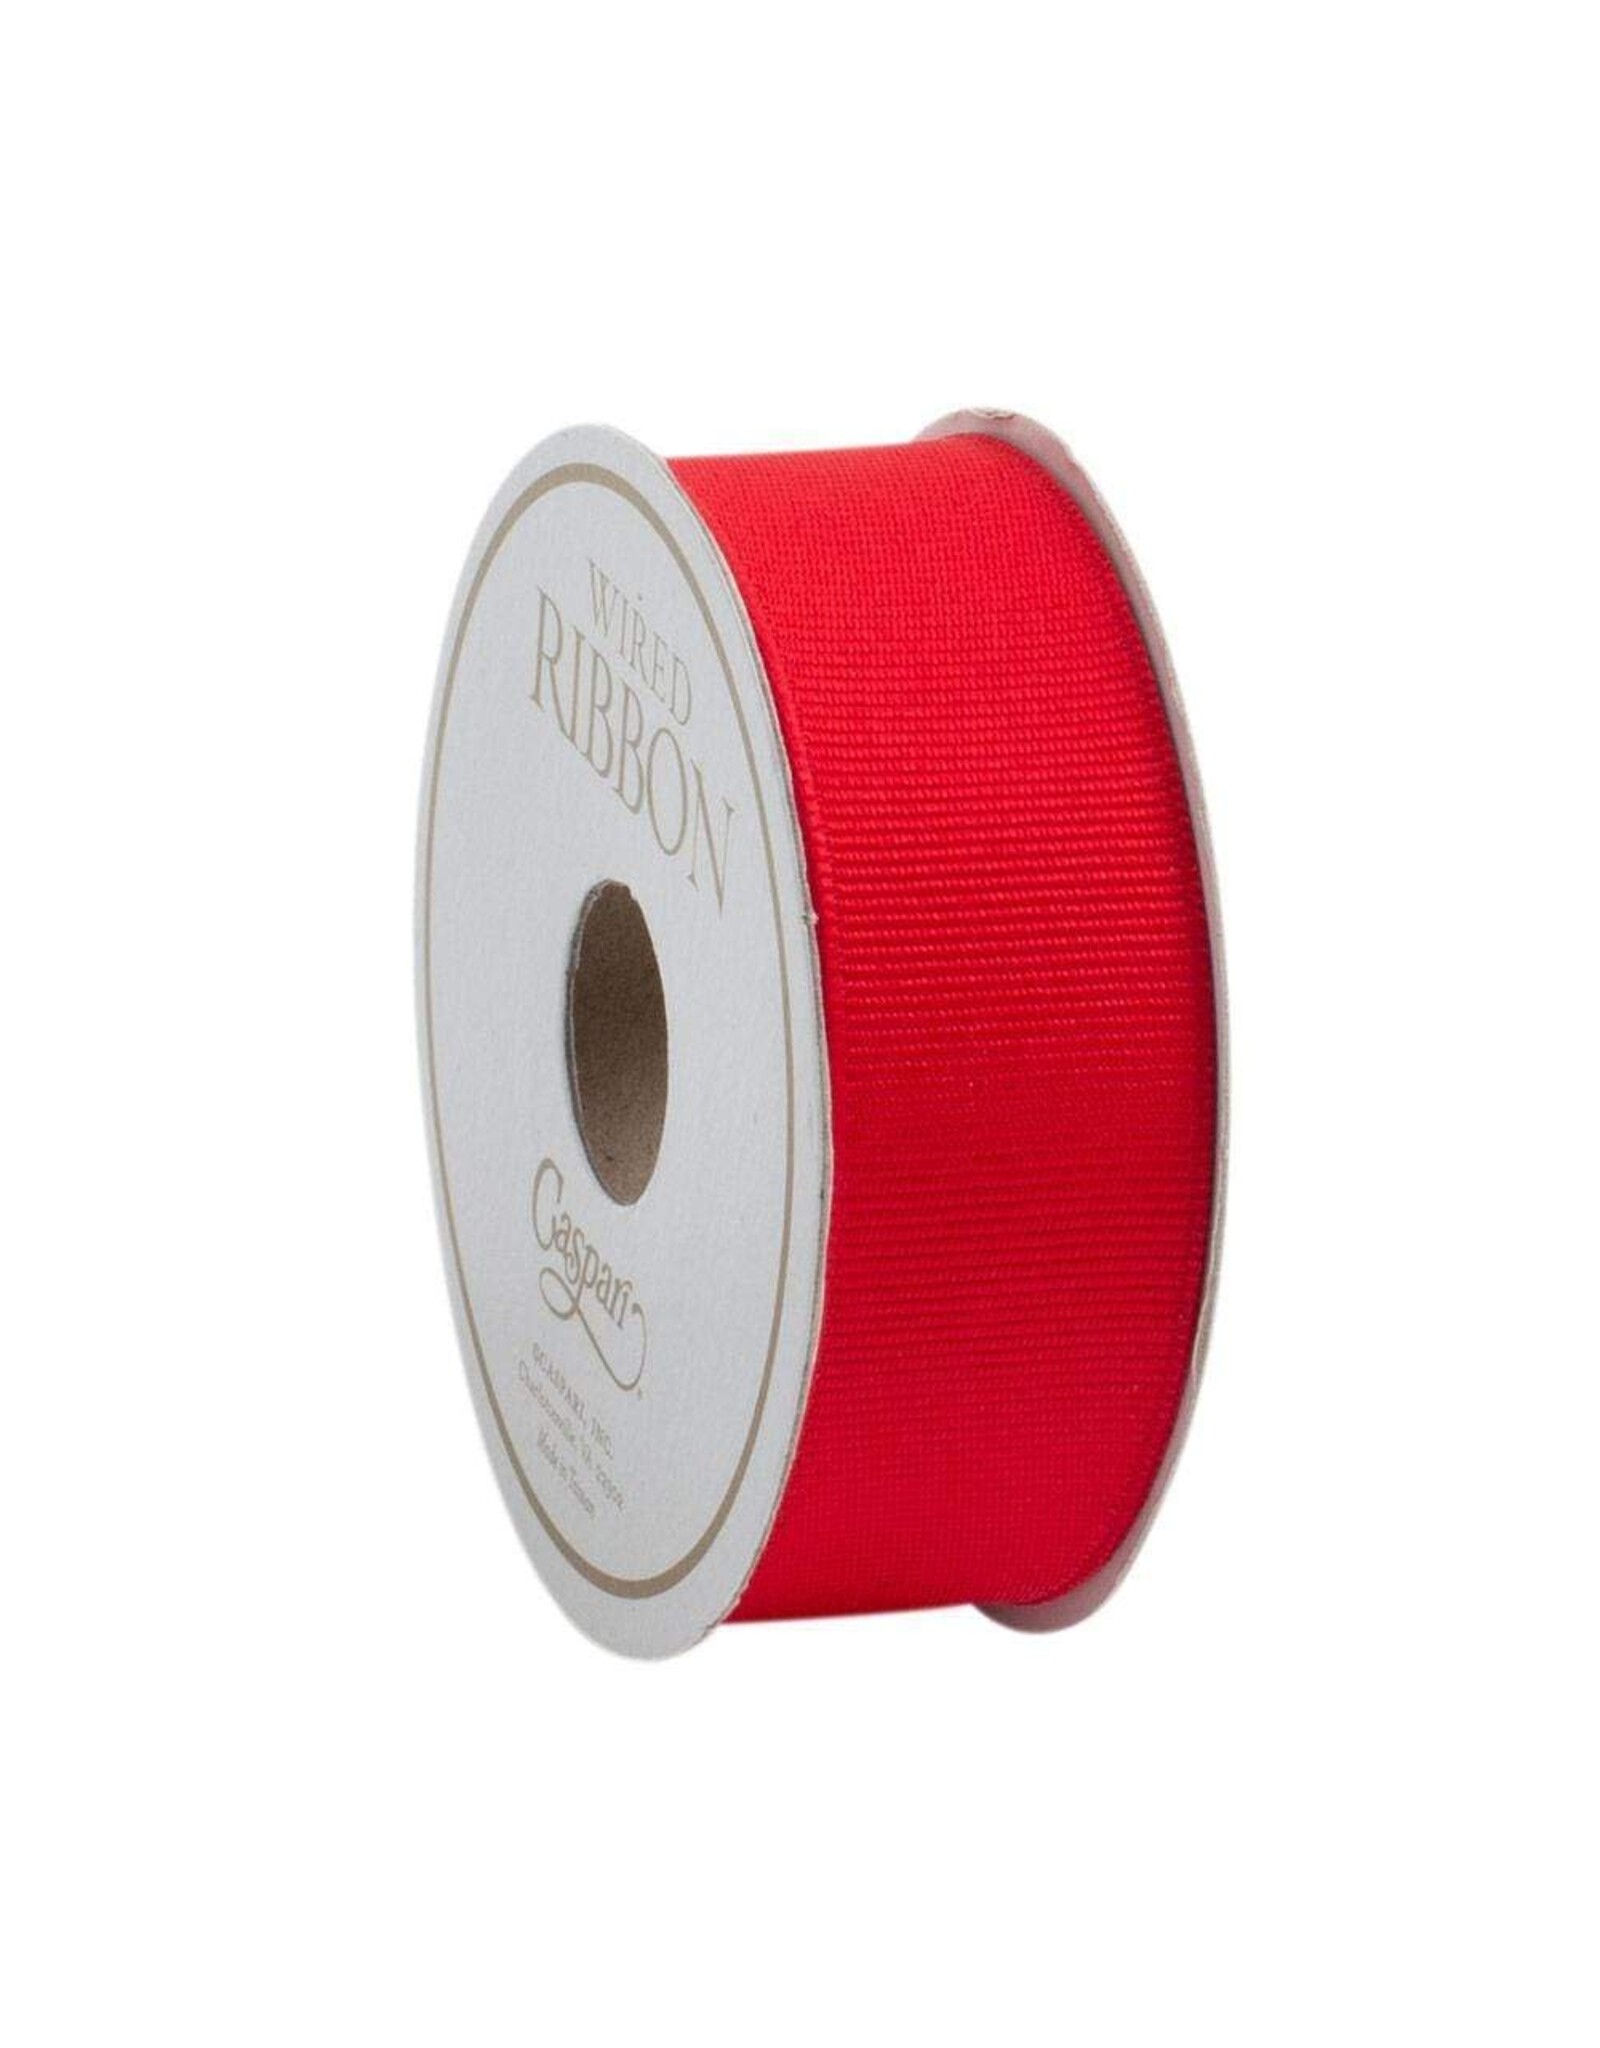 Caspari Narrow Red Grosgrain Wired Ribbon 8 Yard Spool